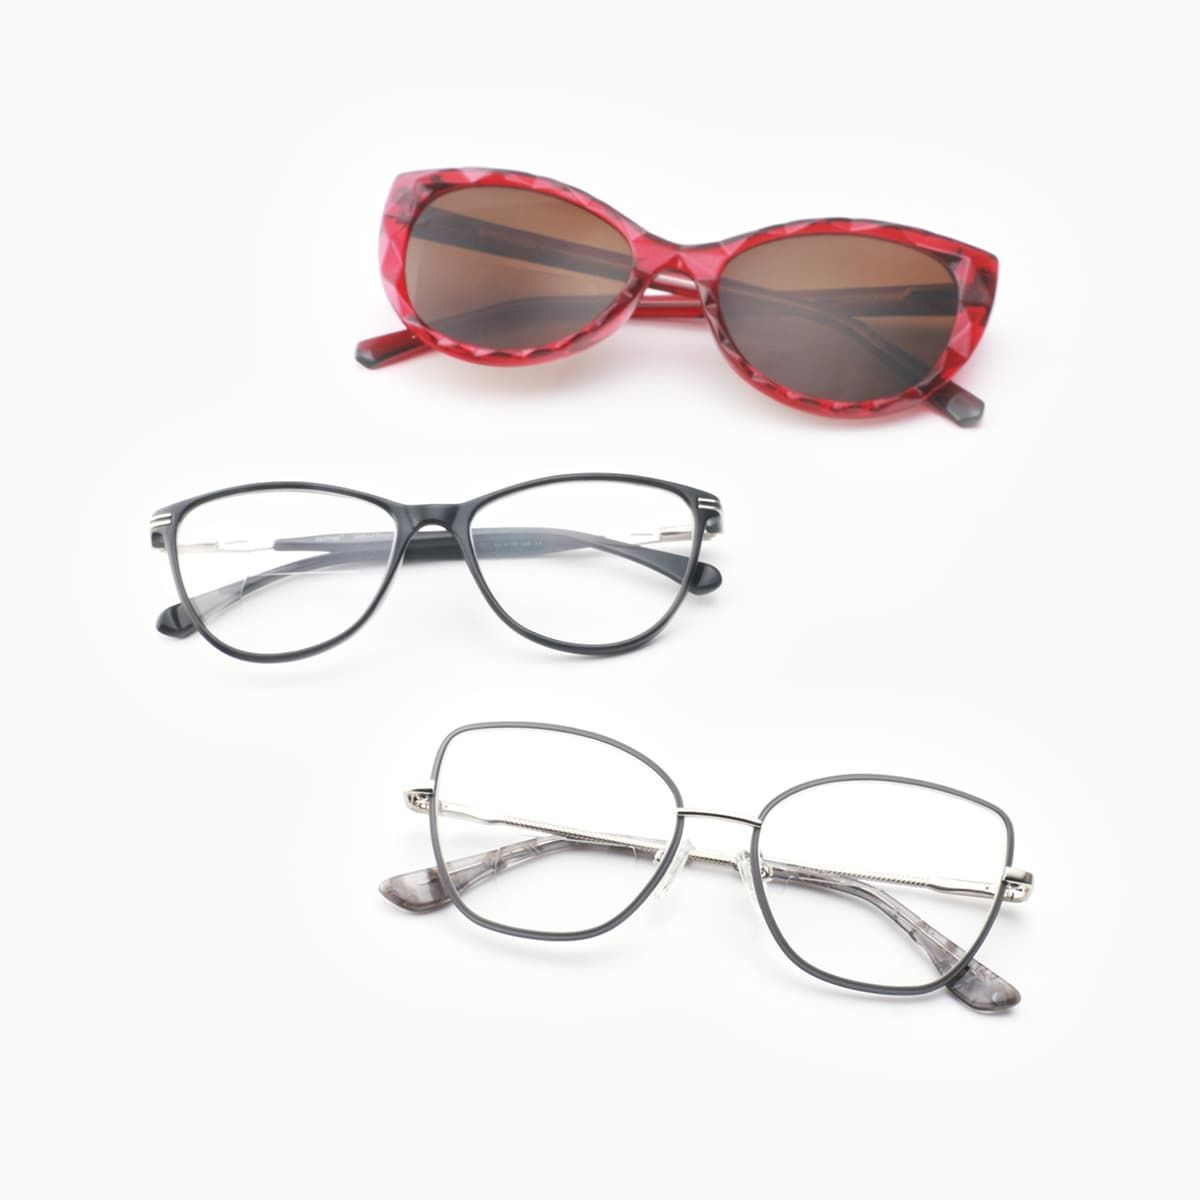 3-Pack Bifocals and Sunglasses Set